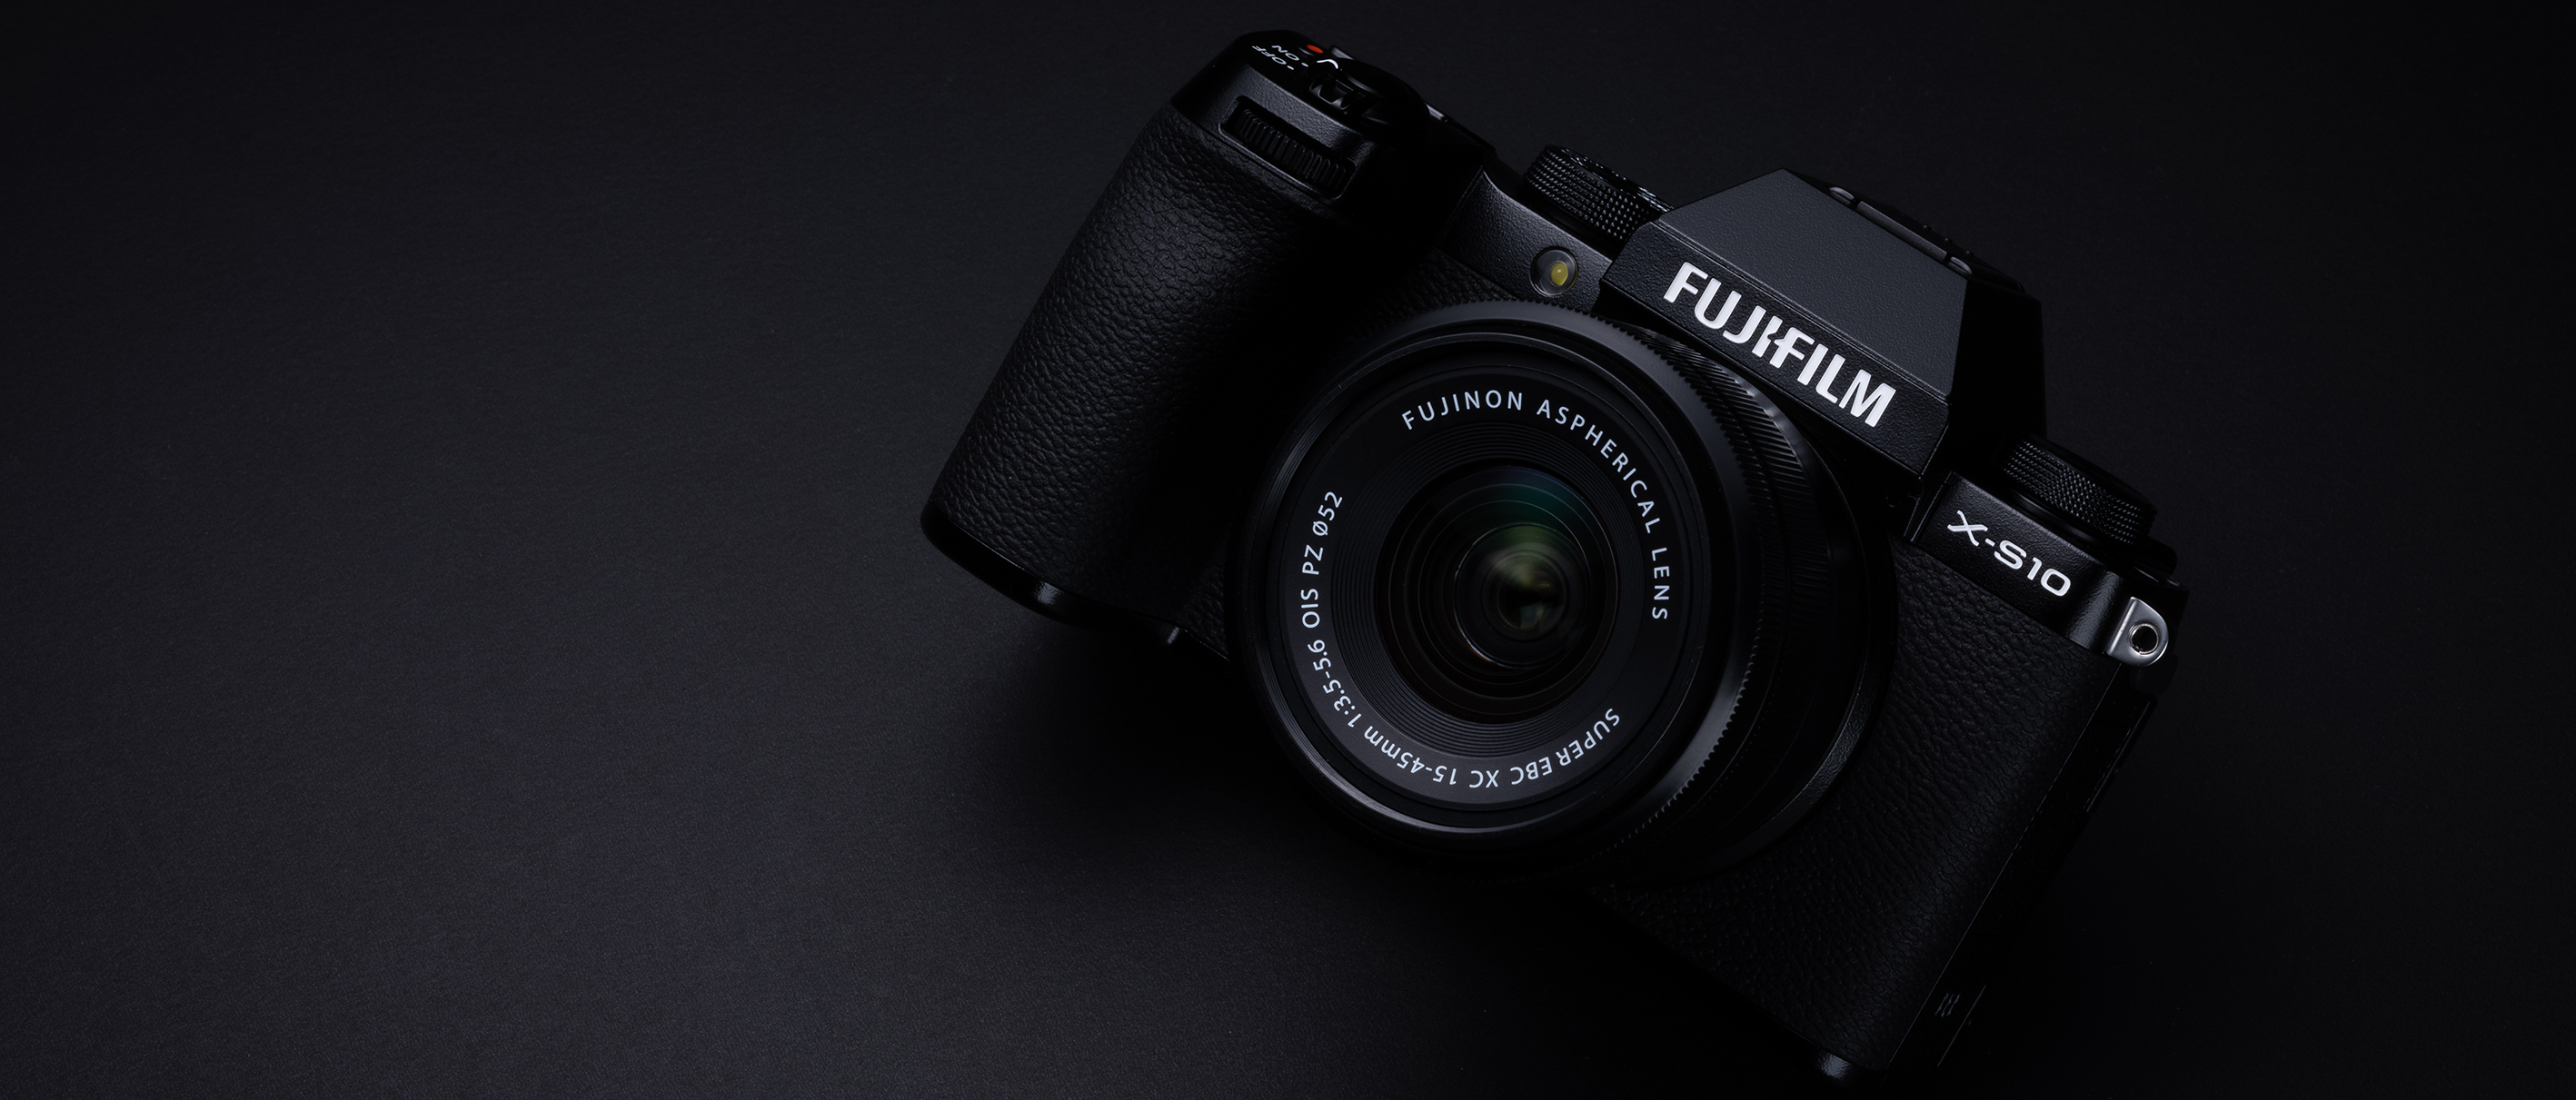 Preview Image: Fujifilm X-S10: Viel Power mit neuem Bedienkonzept